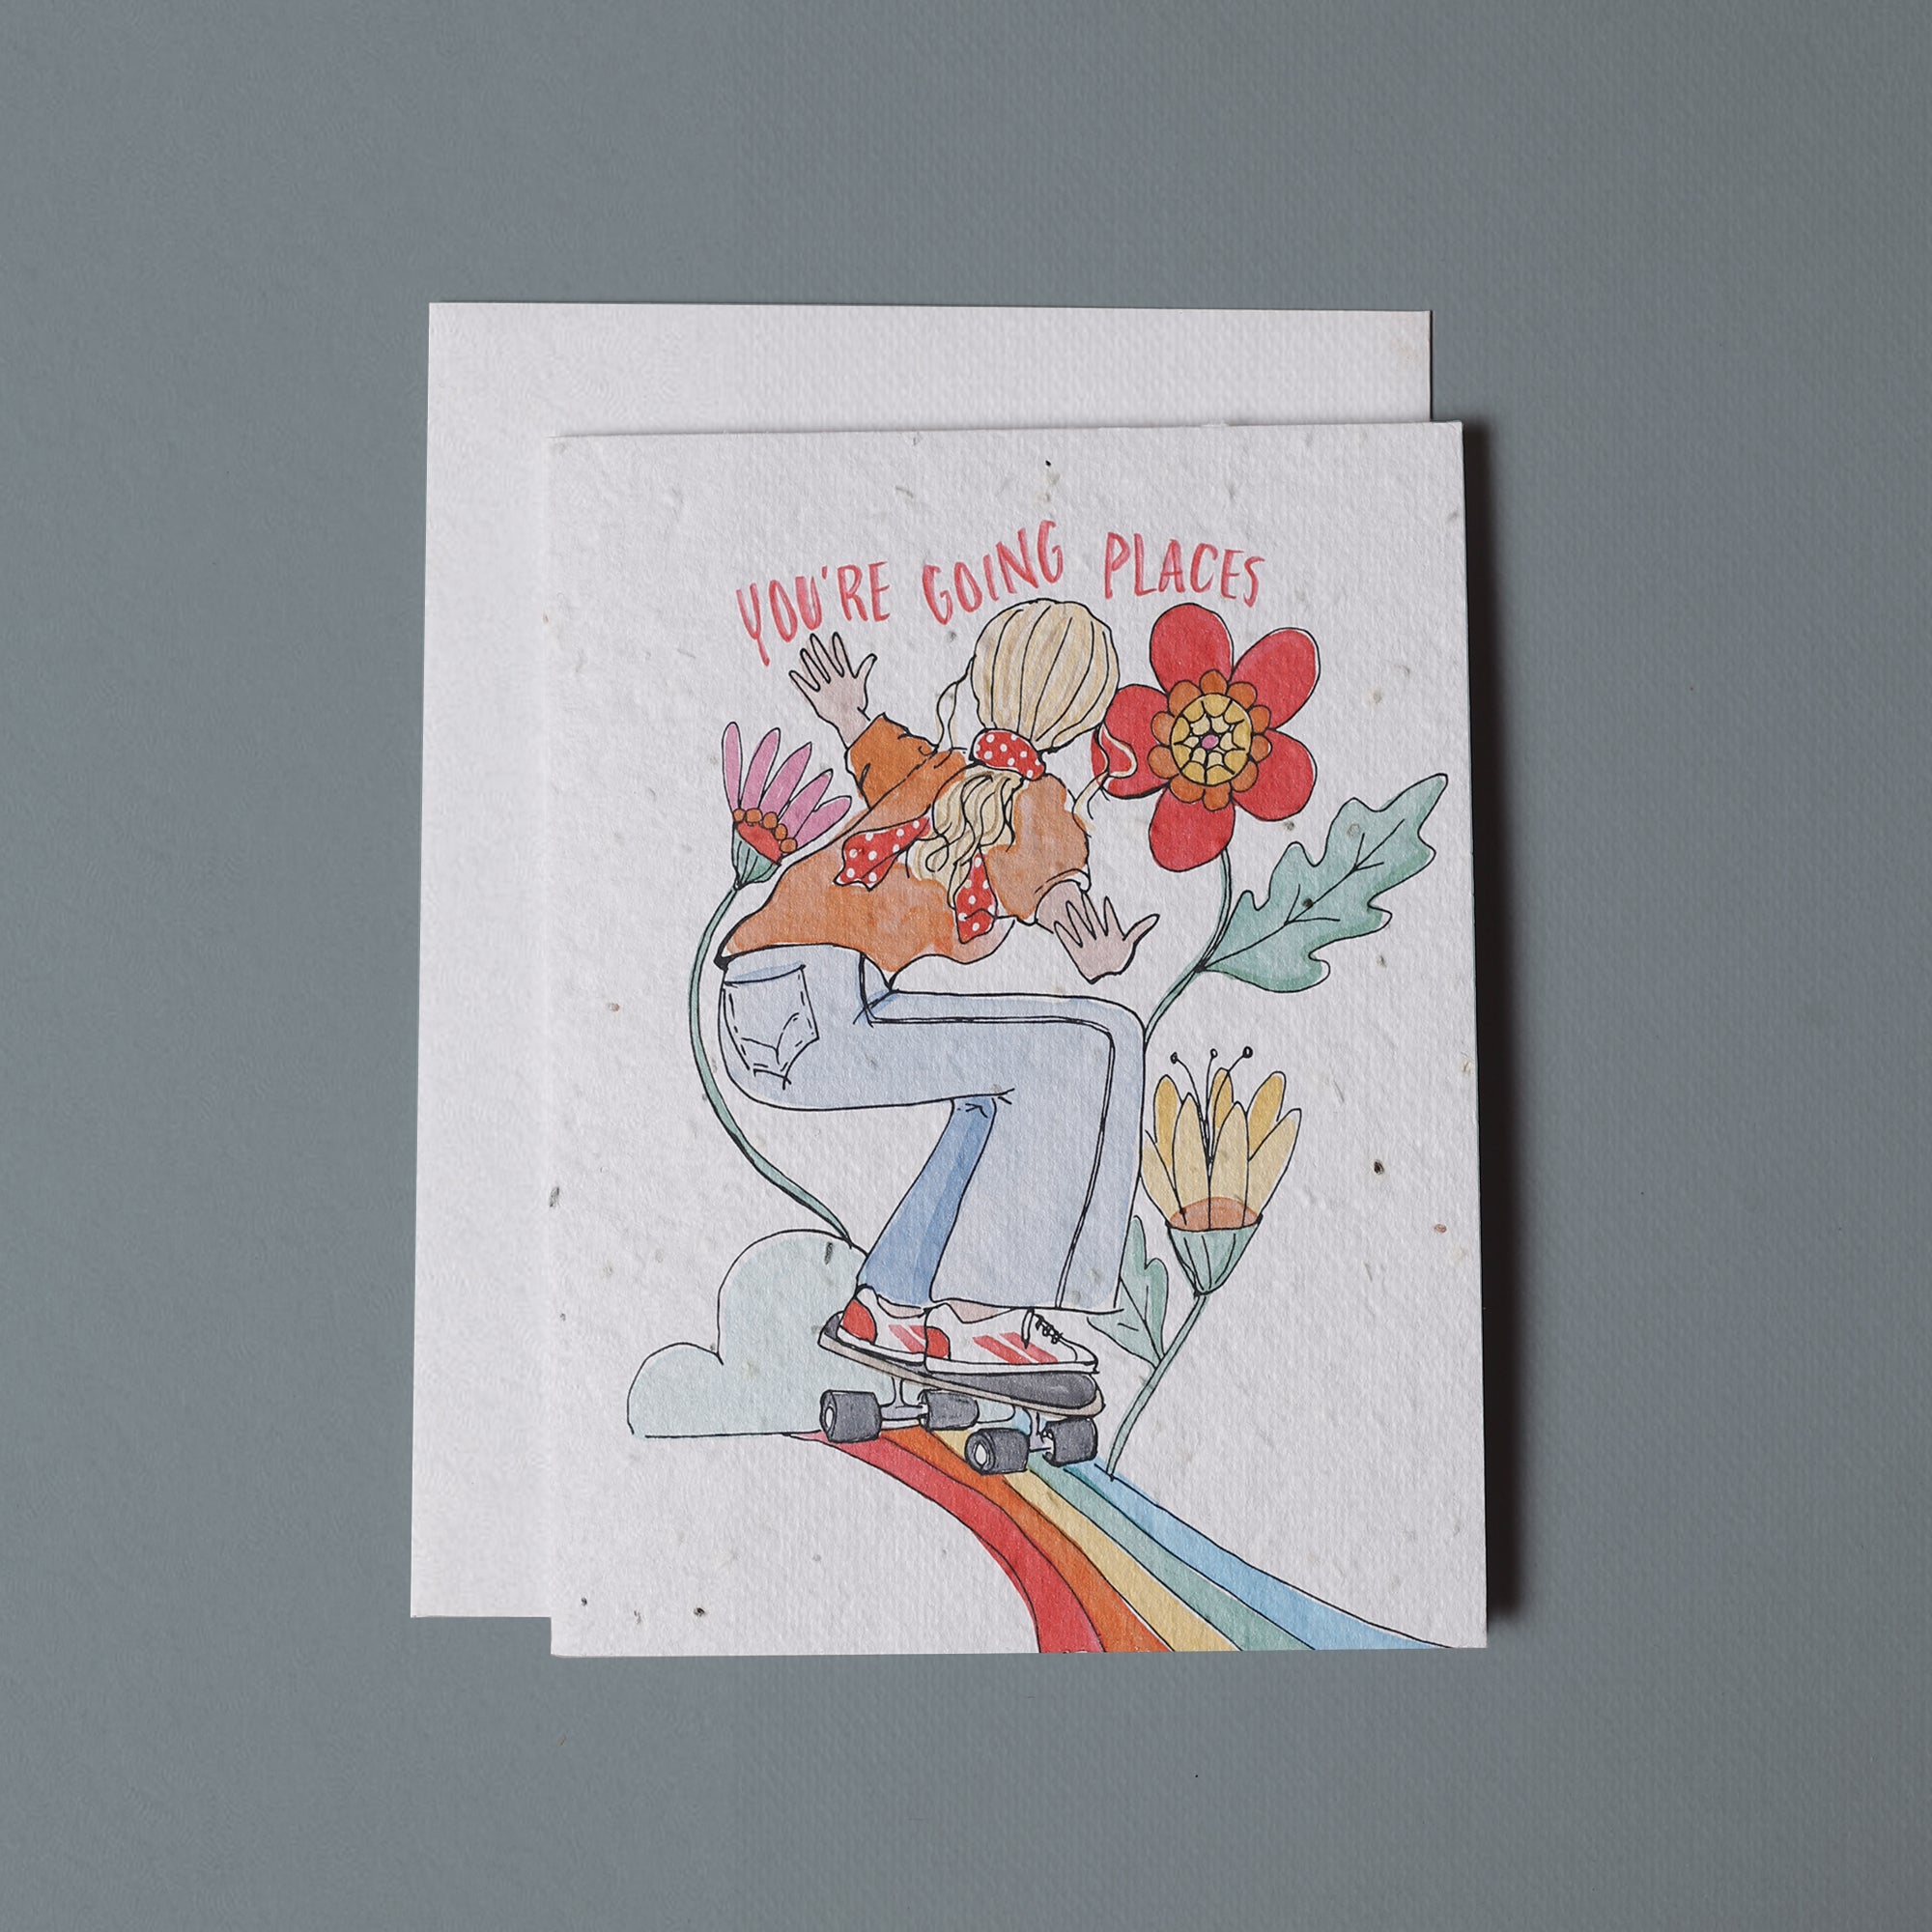 Skater Girl - Wildflower Seed Card - Jill + Jack Paper